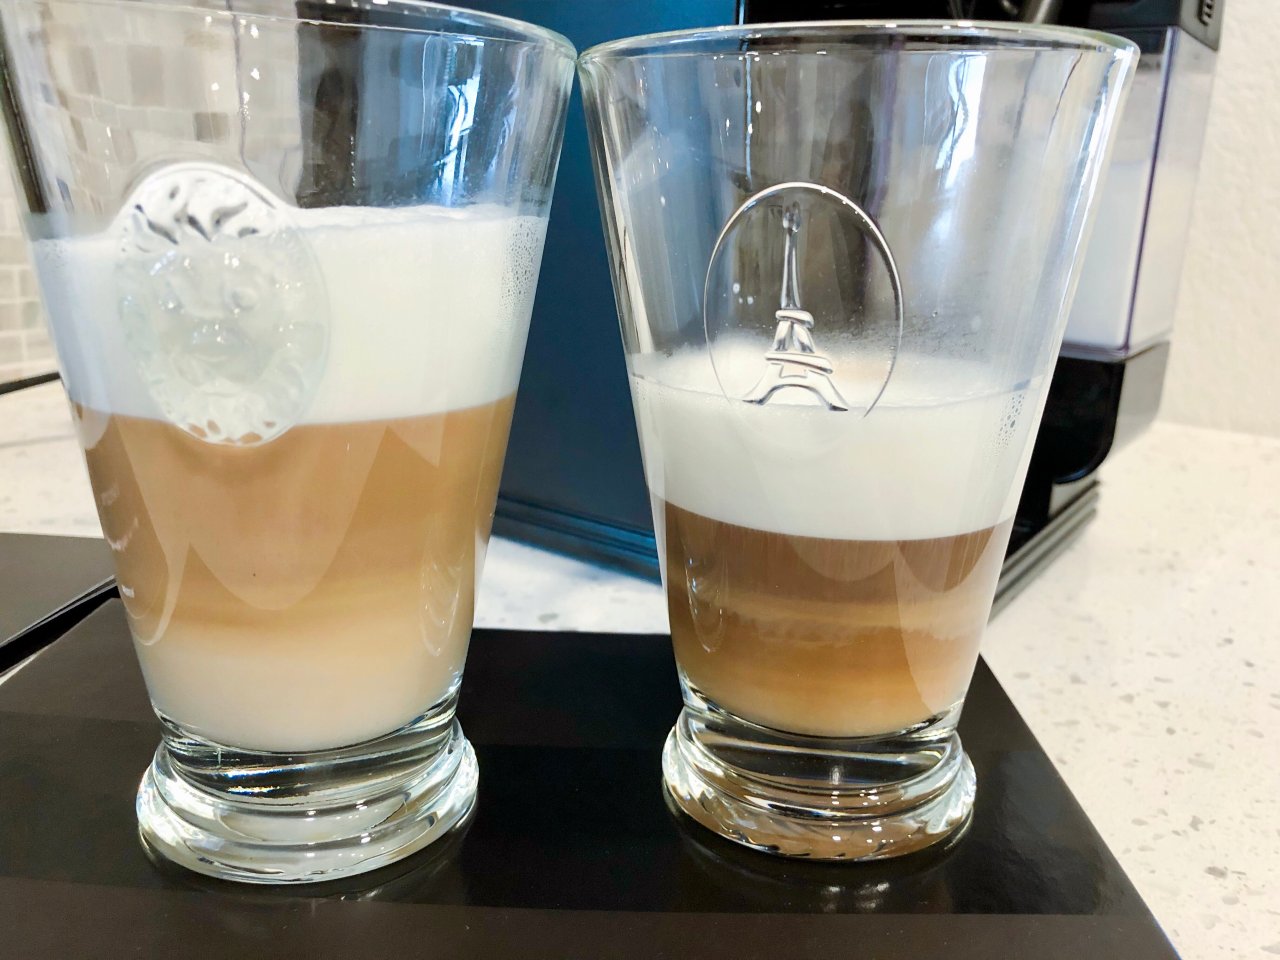 私人专属barista驾到：Nespresso Lattissima 胶囊咖啡机测评+5种咖啡做法详解